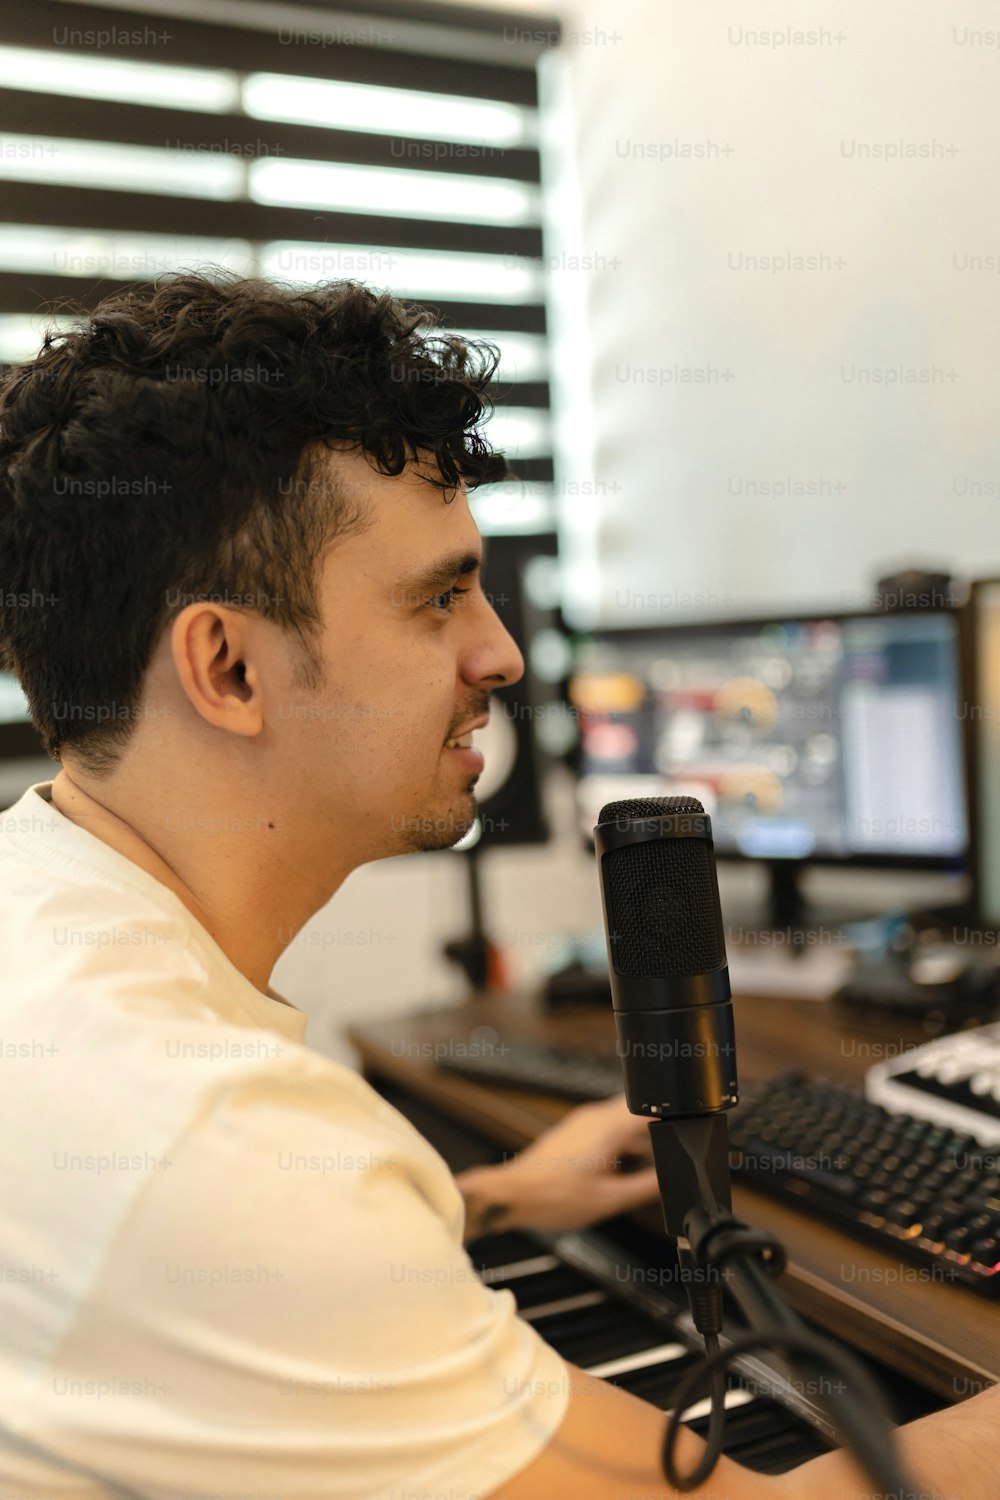 Un hombre sentado frente a una computadora con un micrófono